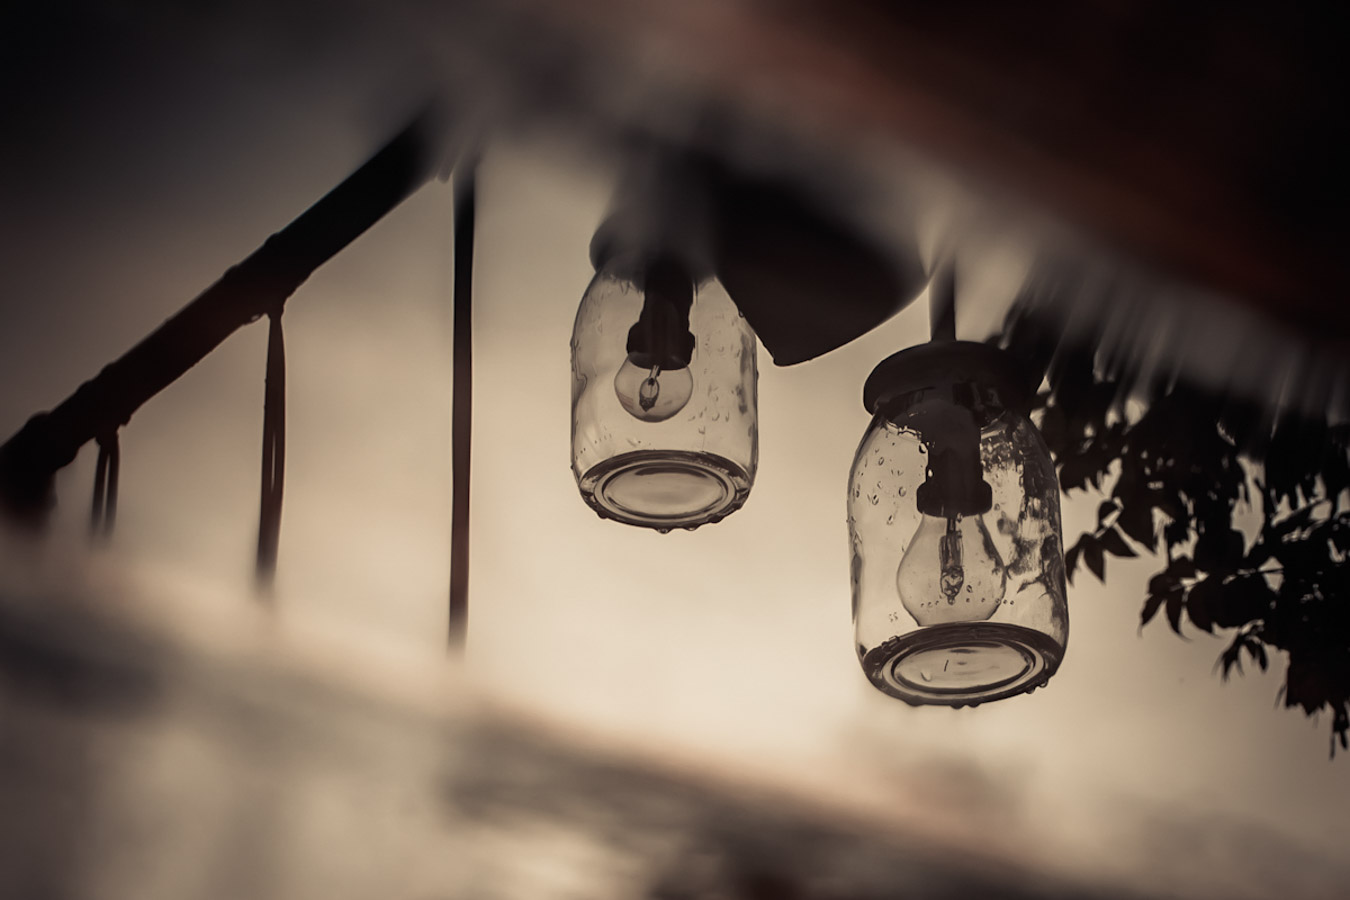 Themes: light bulbs and reflection